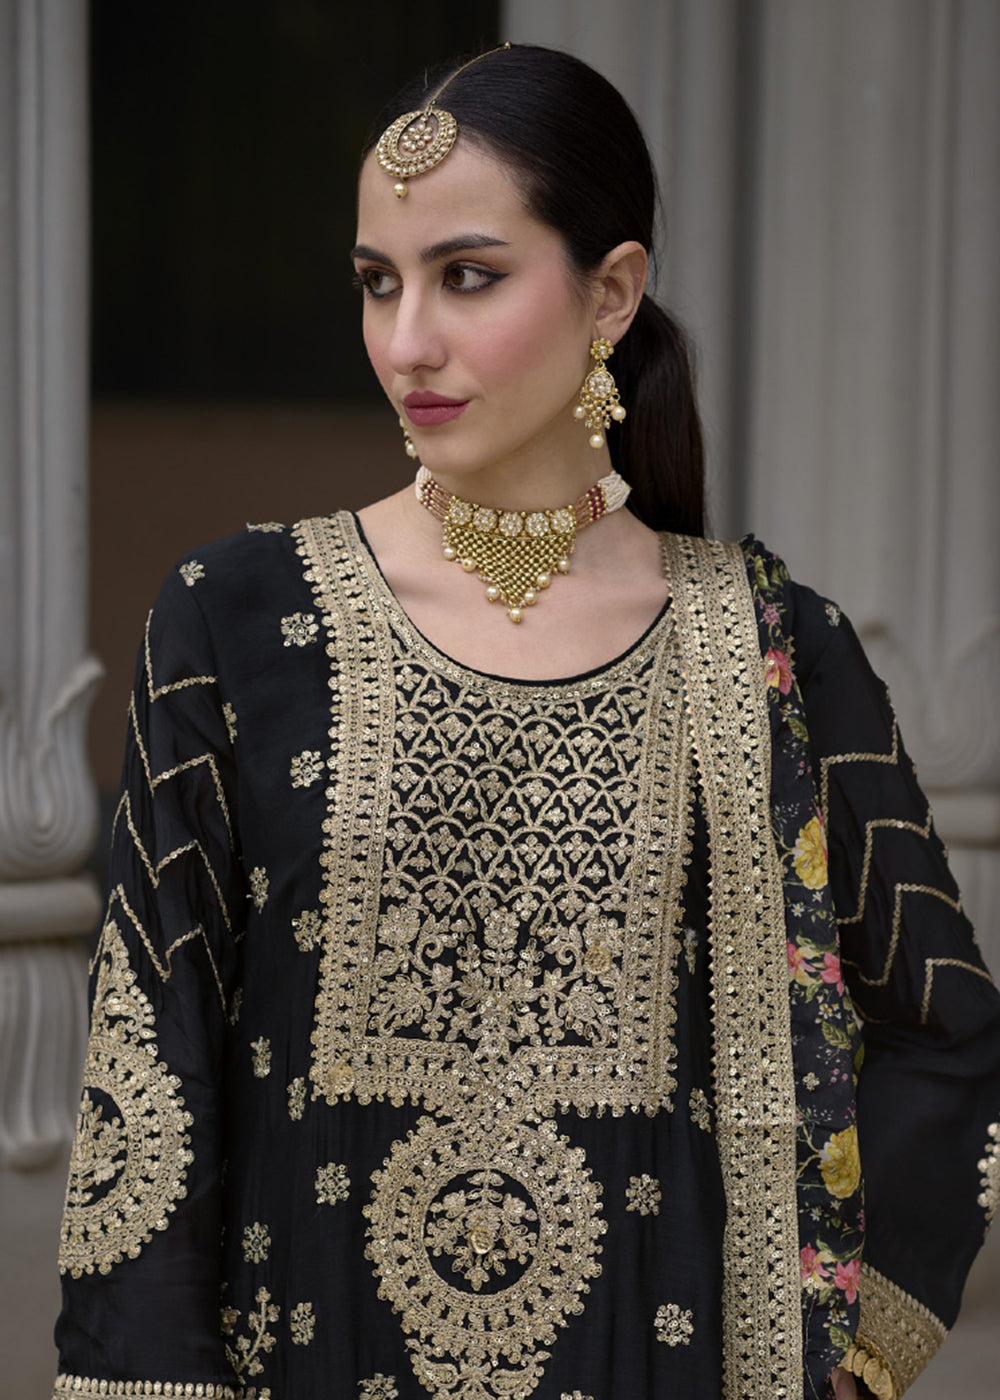 Buy Now Elegant Black Pure Chinnon Pakistani Style Palazzo Suit Online in USA, UK, Canada, Germany, Australia & Worldwide at Empress Clothing. 